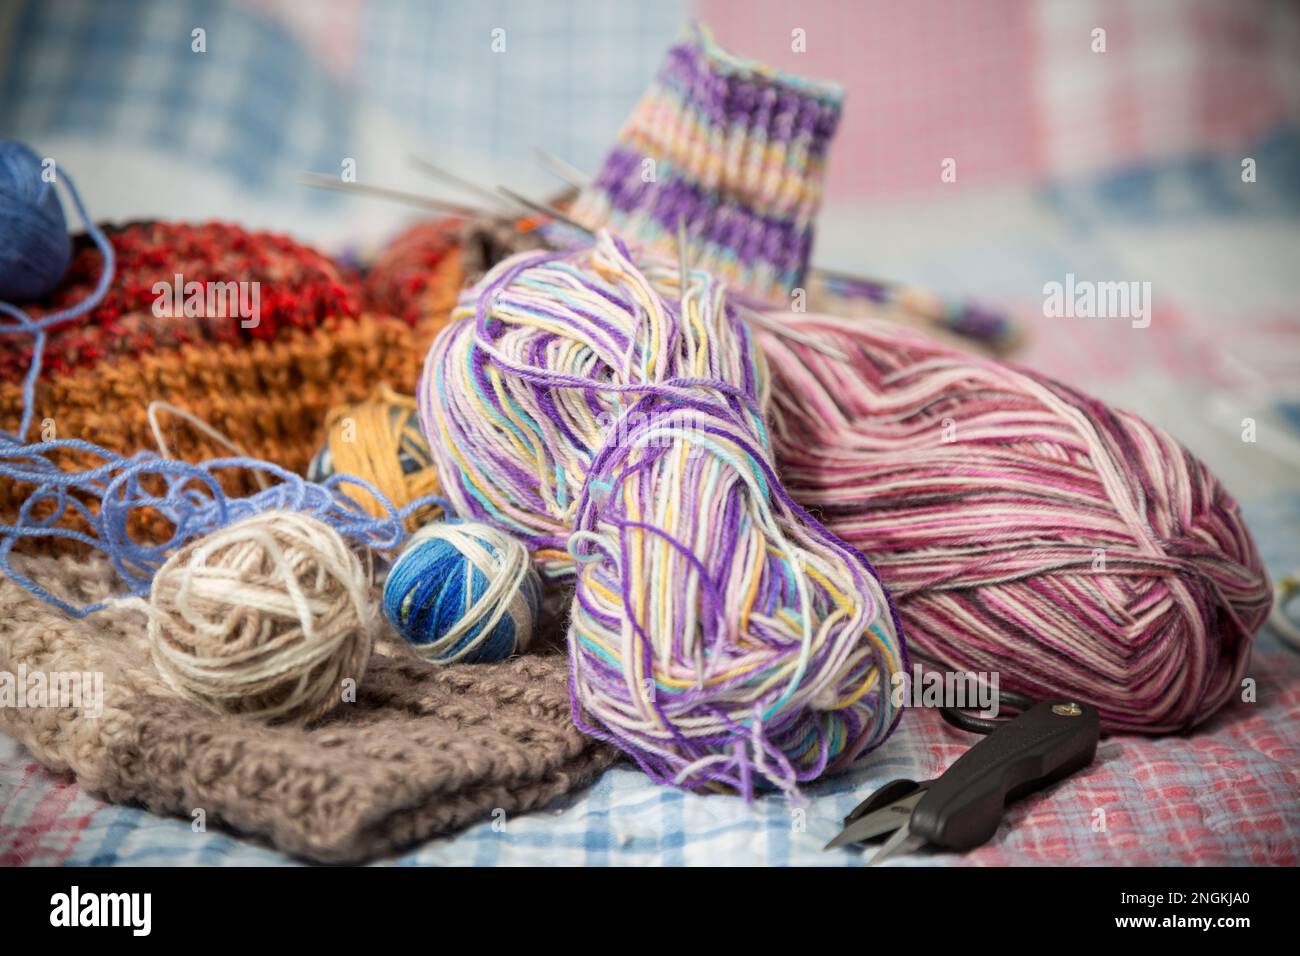 Farbige Fäden, Stricknadeln und andere Handstrickgegenstände auf dem Bett. Stockfoto